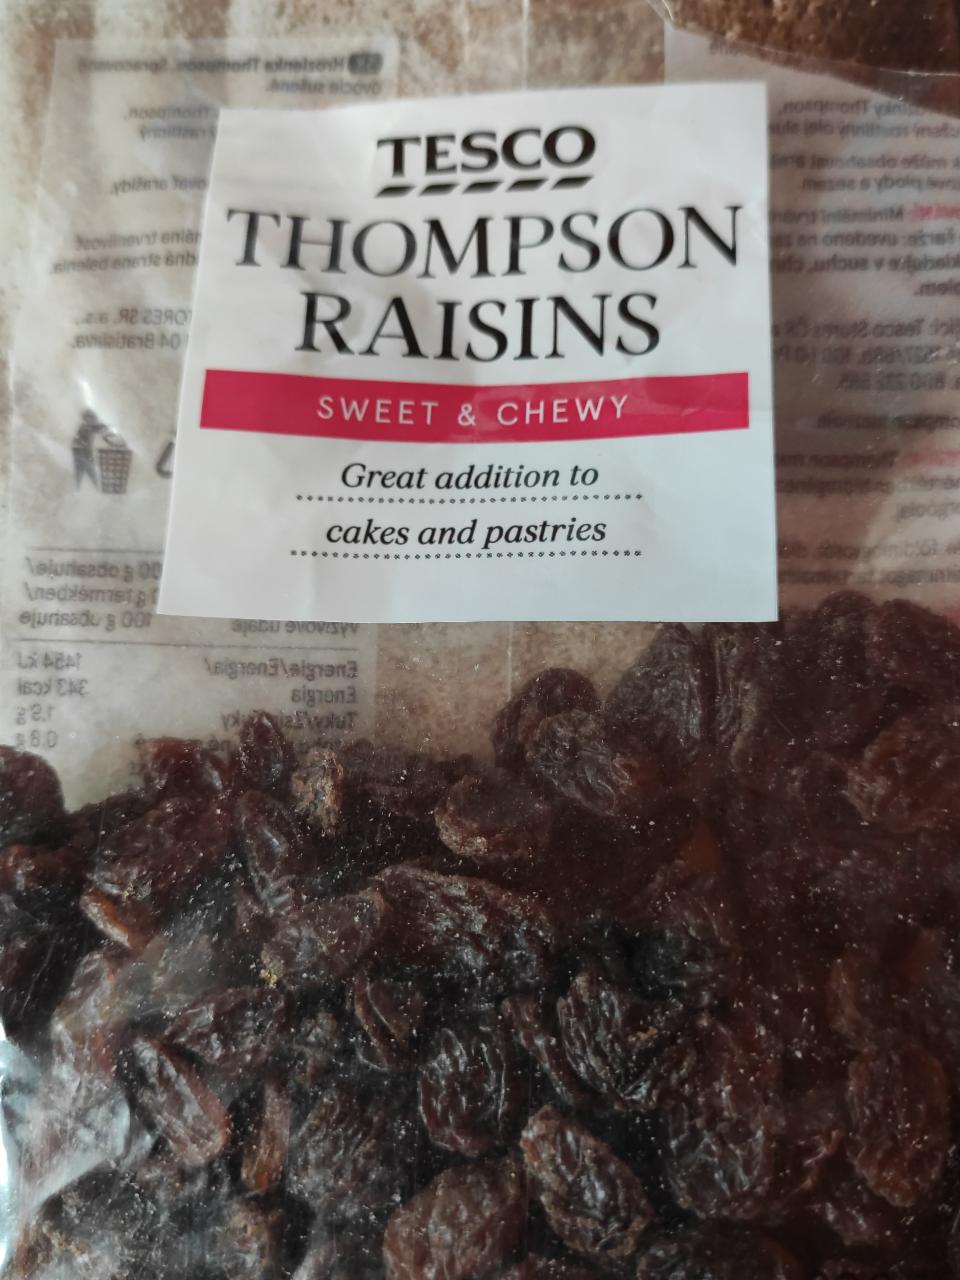 Képek - Thompson Raisins sweet & chewy Tesco